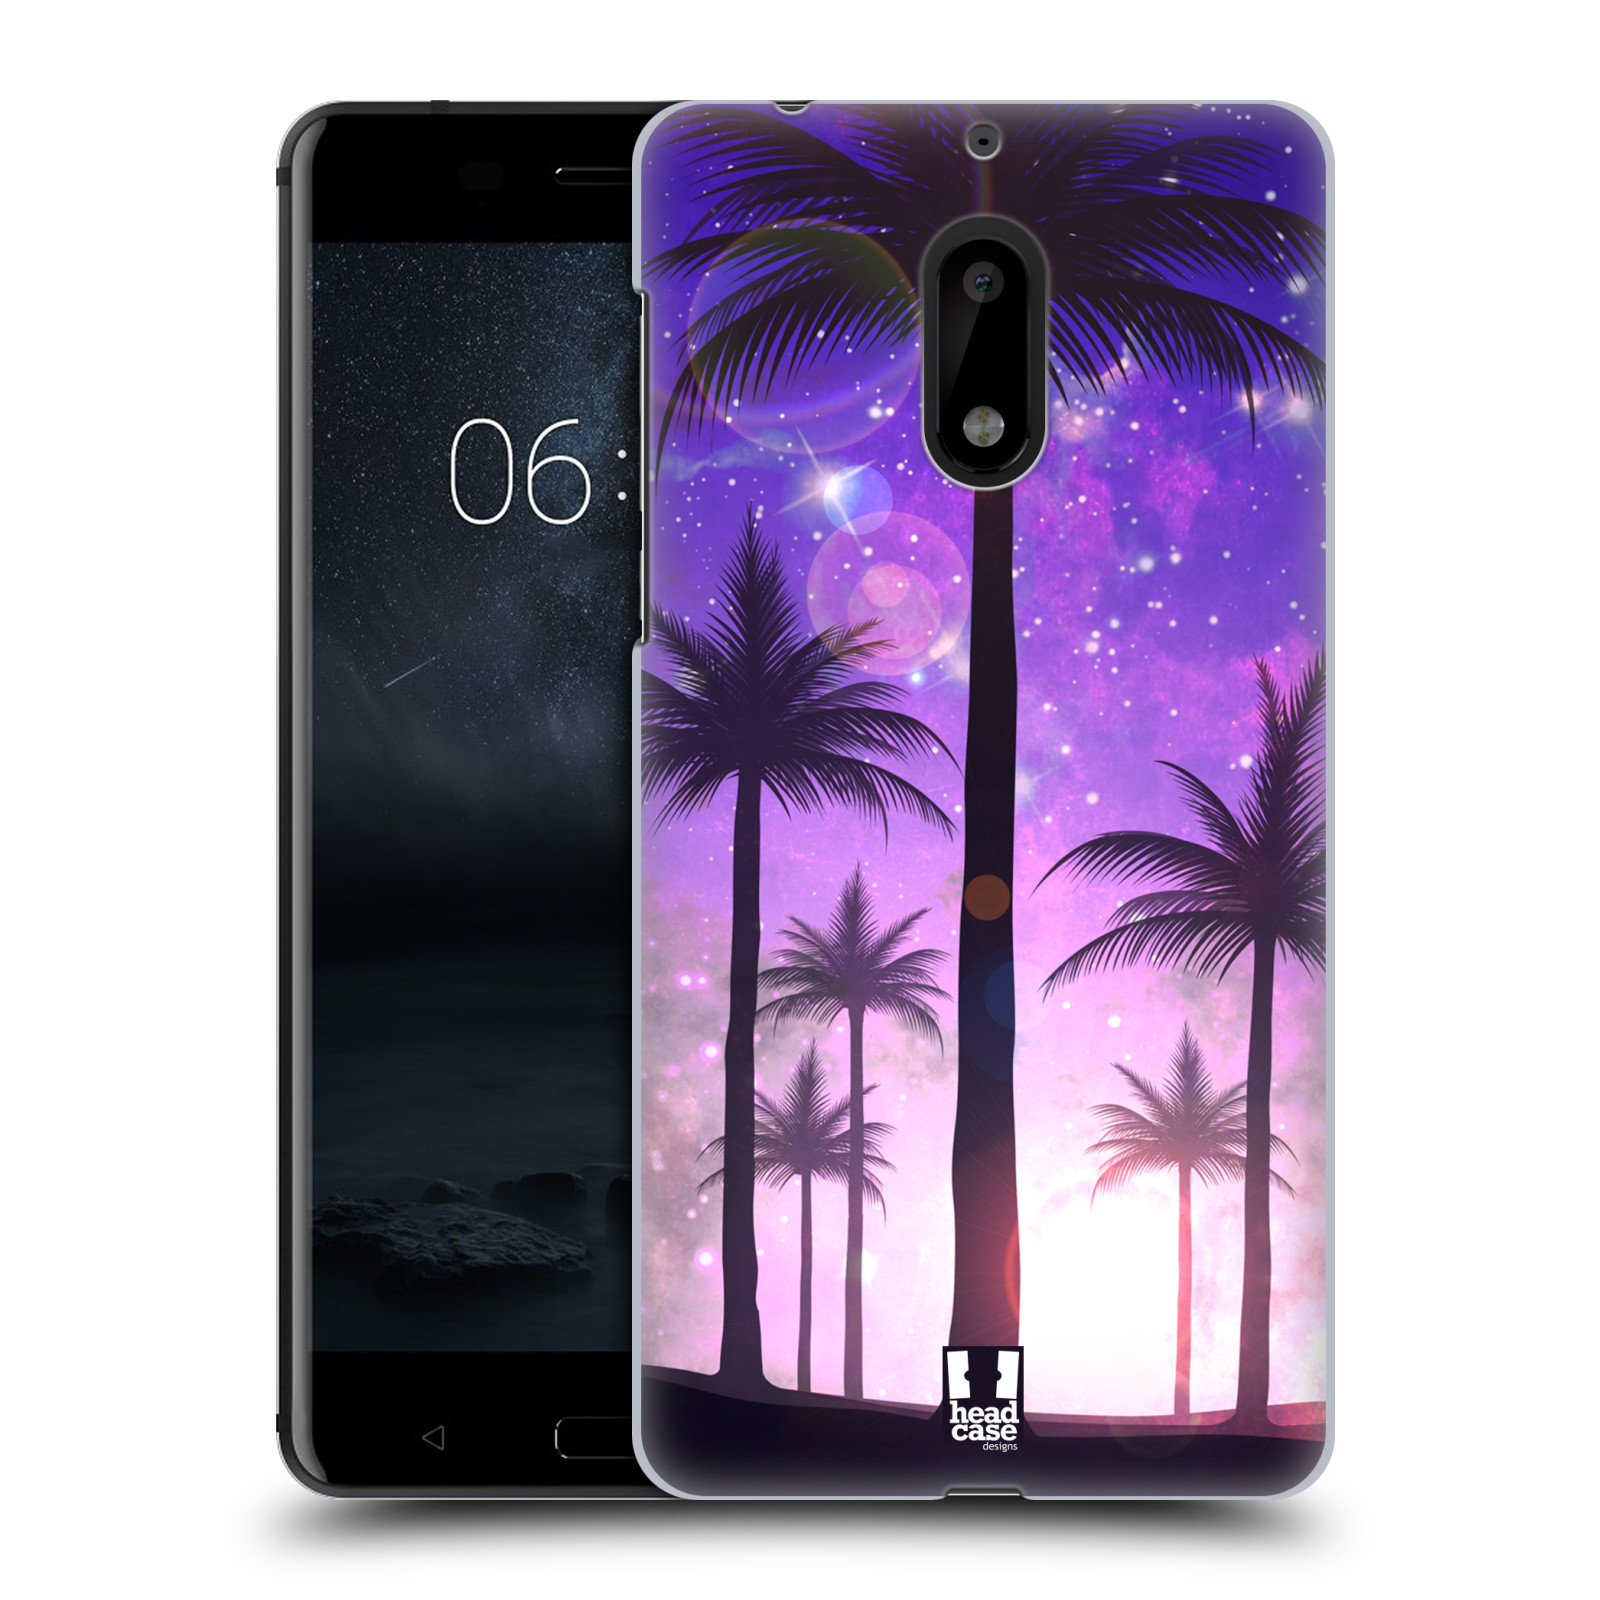 HEAD CASE plastový obal na mobil Nokia 6 vzor Kreslený motiv silueta moře a palmy FIALOVÁ